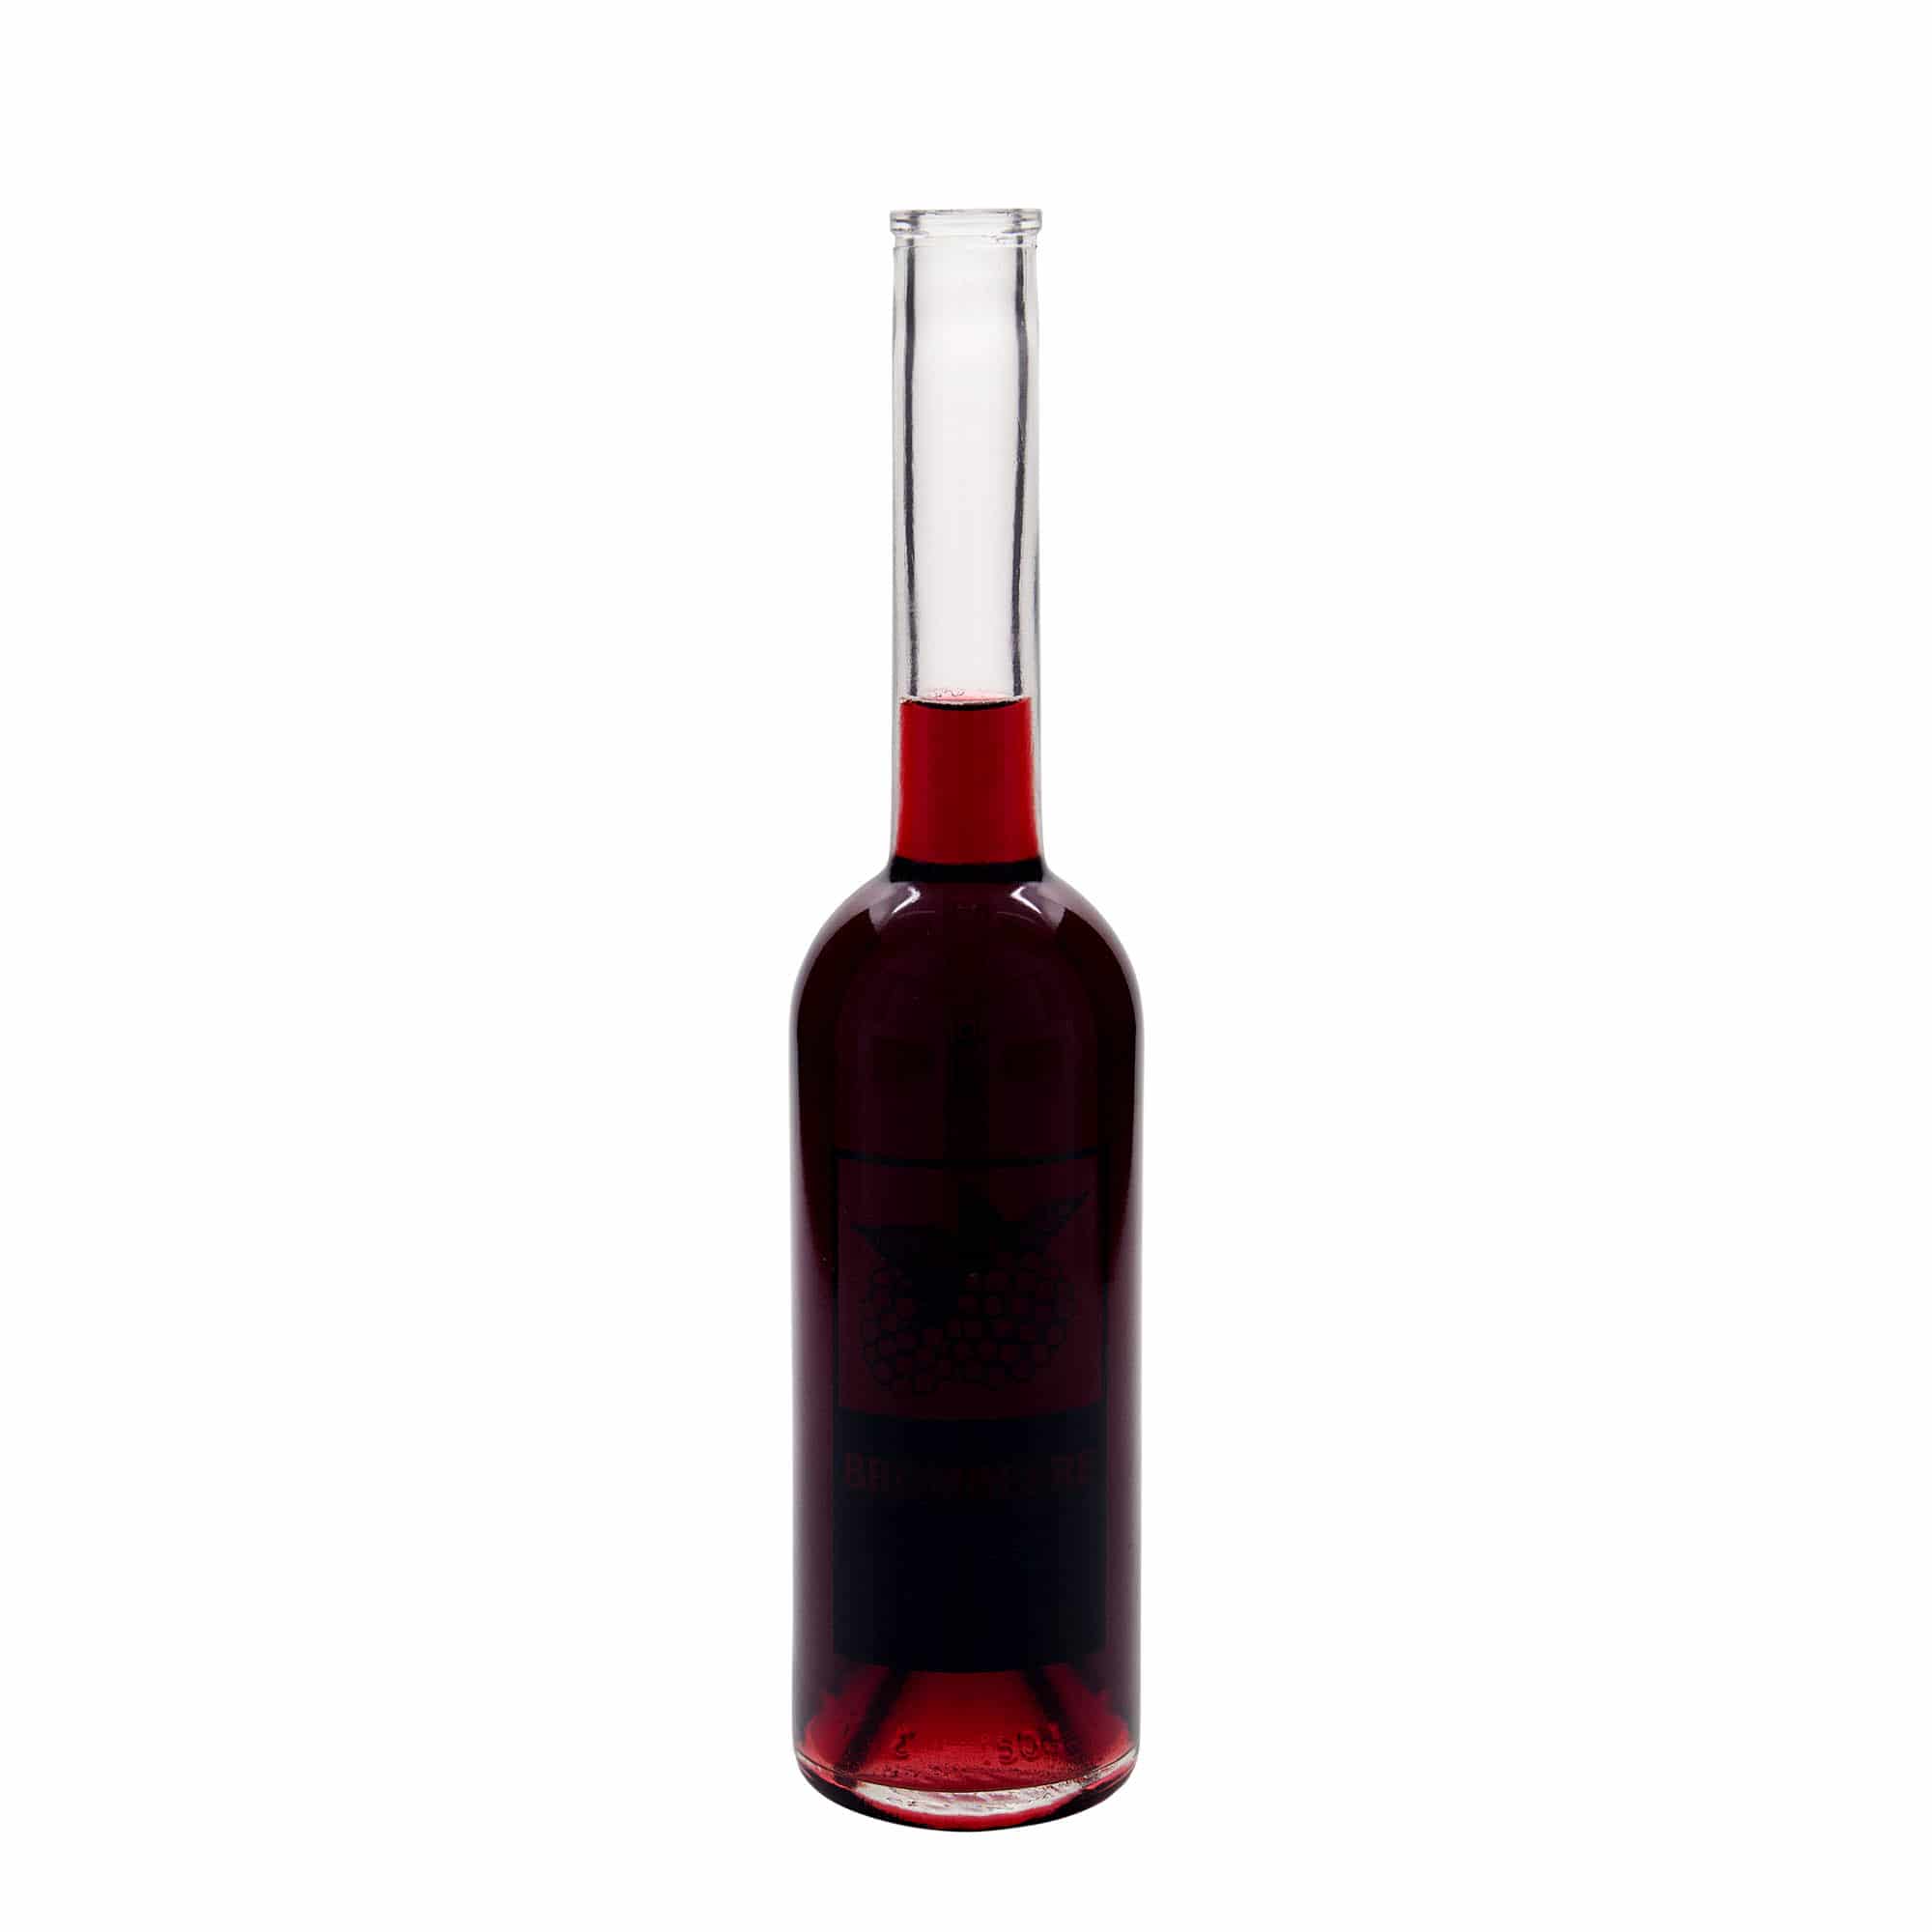 500 ml glass bottle 'Opera', print: “Brombeere”, closure: cork